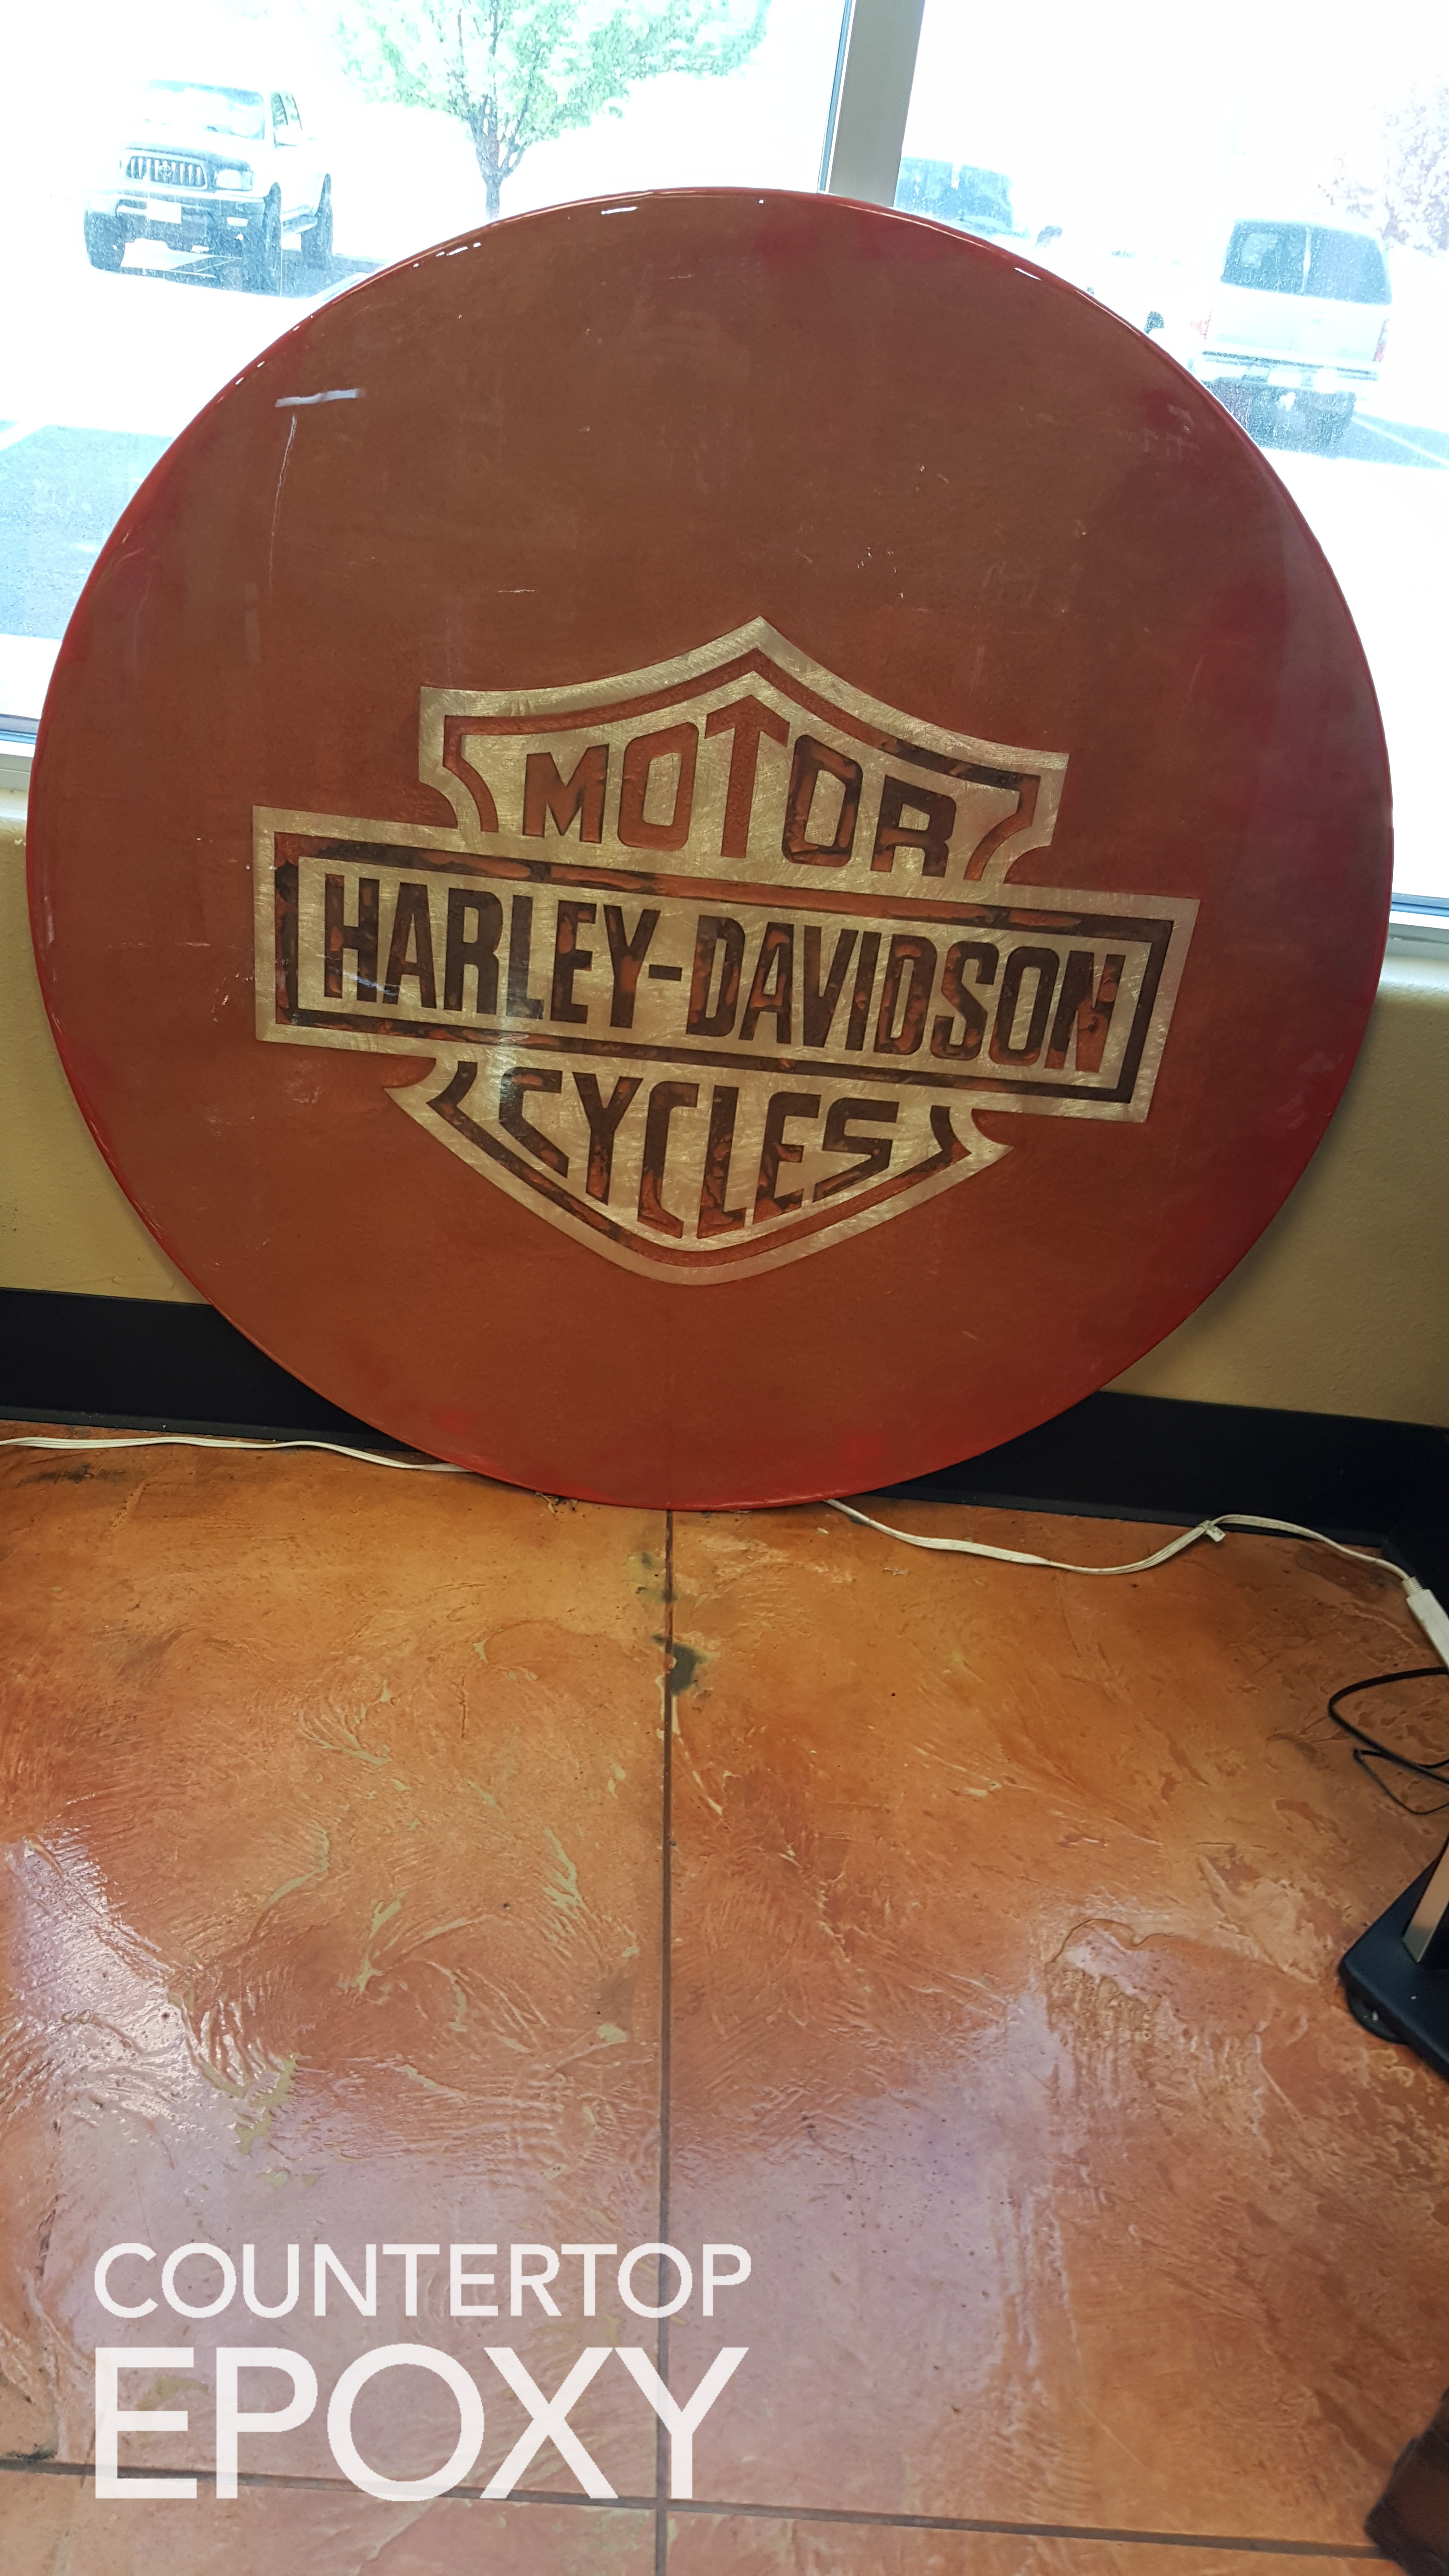 Harley Davidson logo inlaid with FX Poxy countertop epoxy